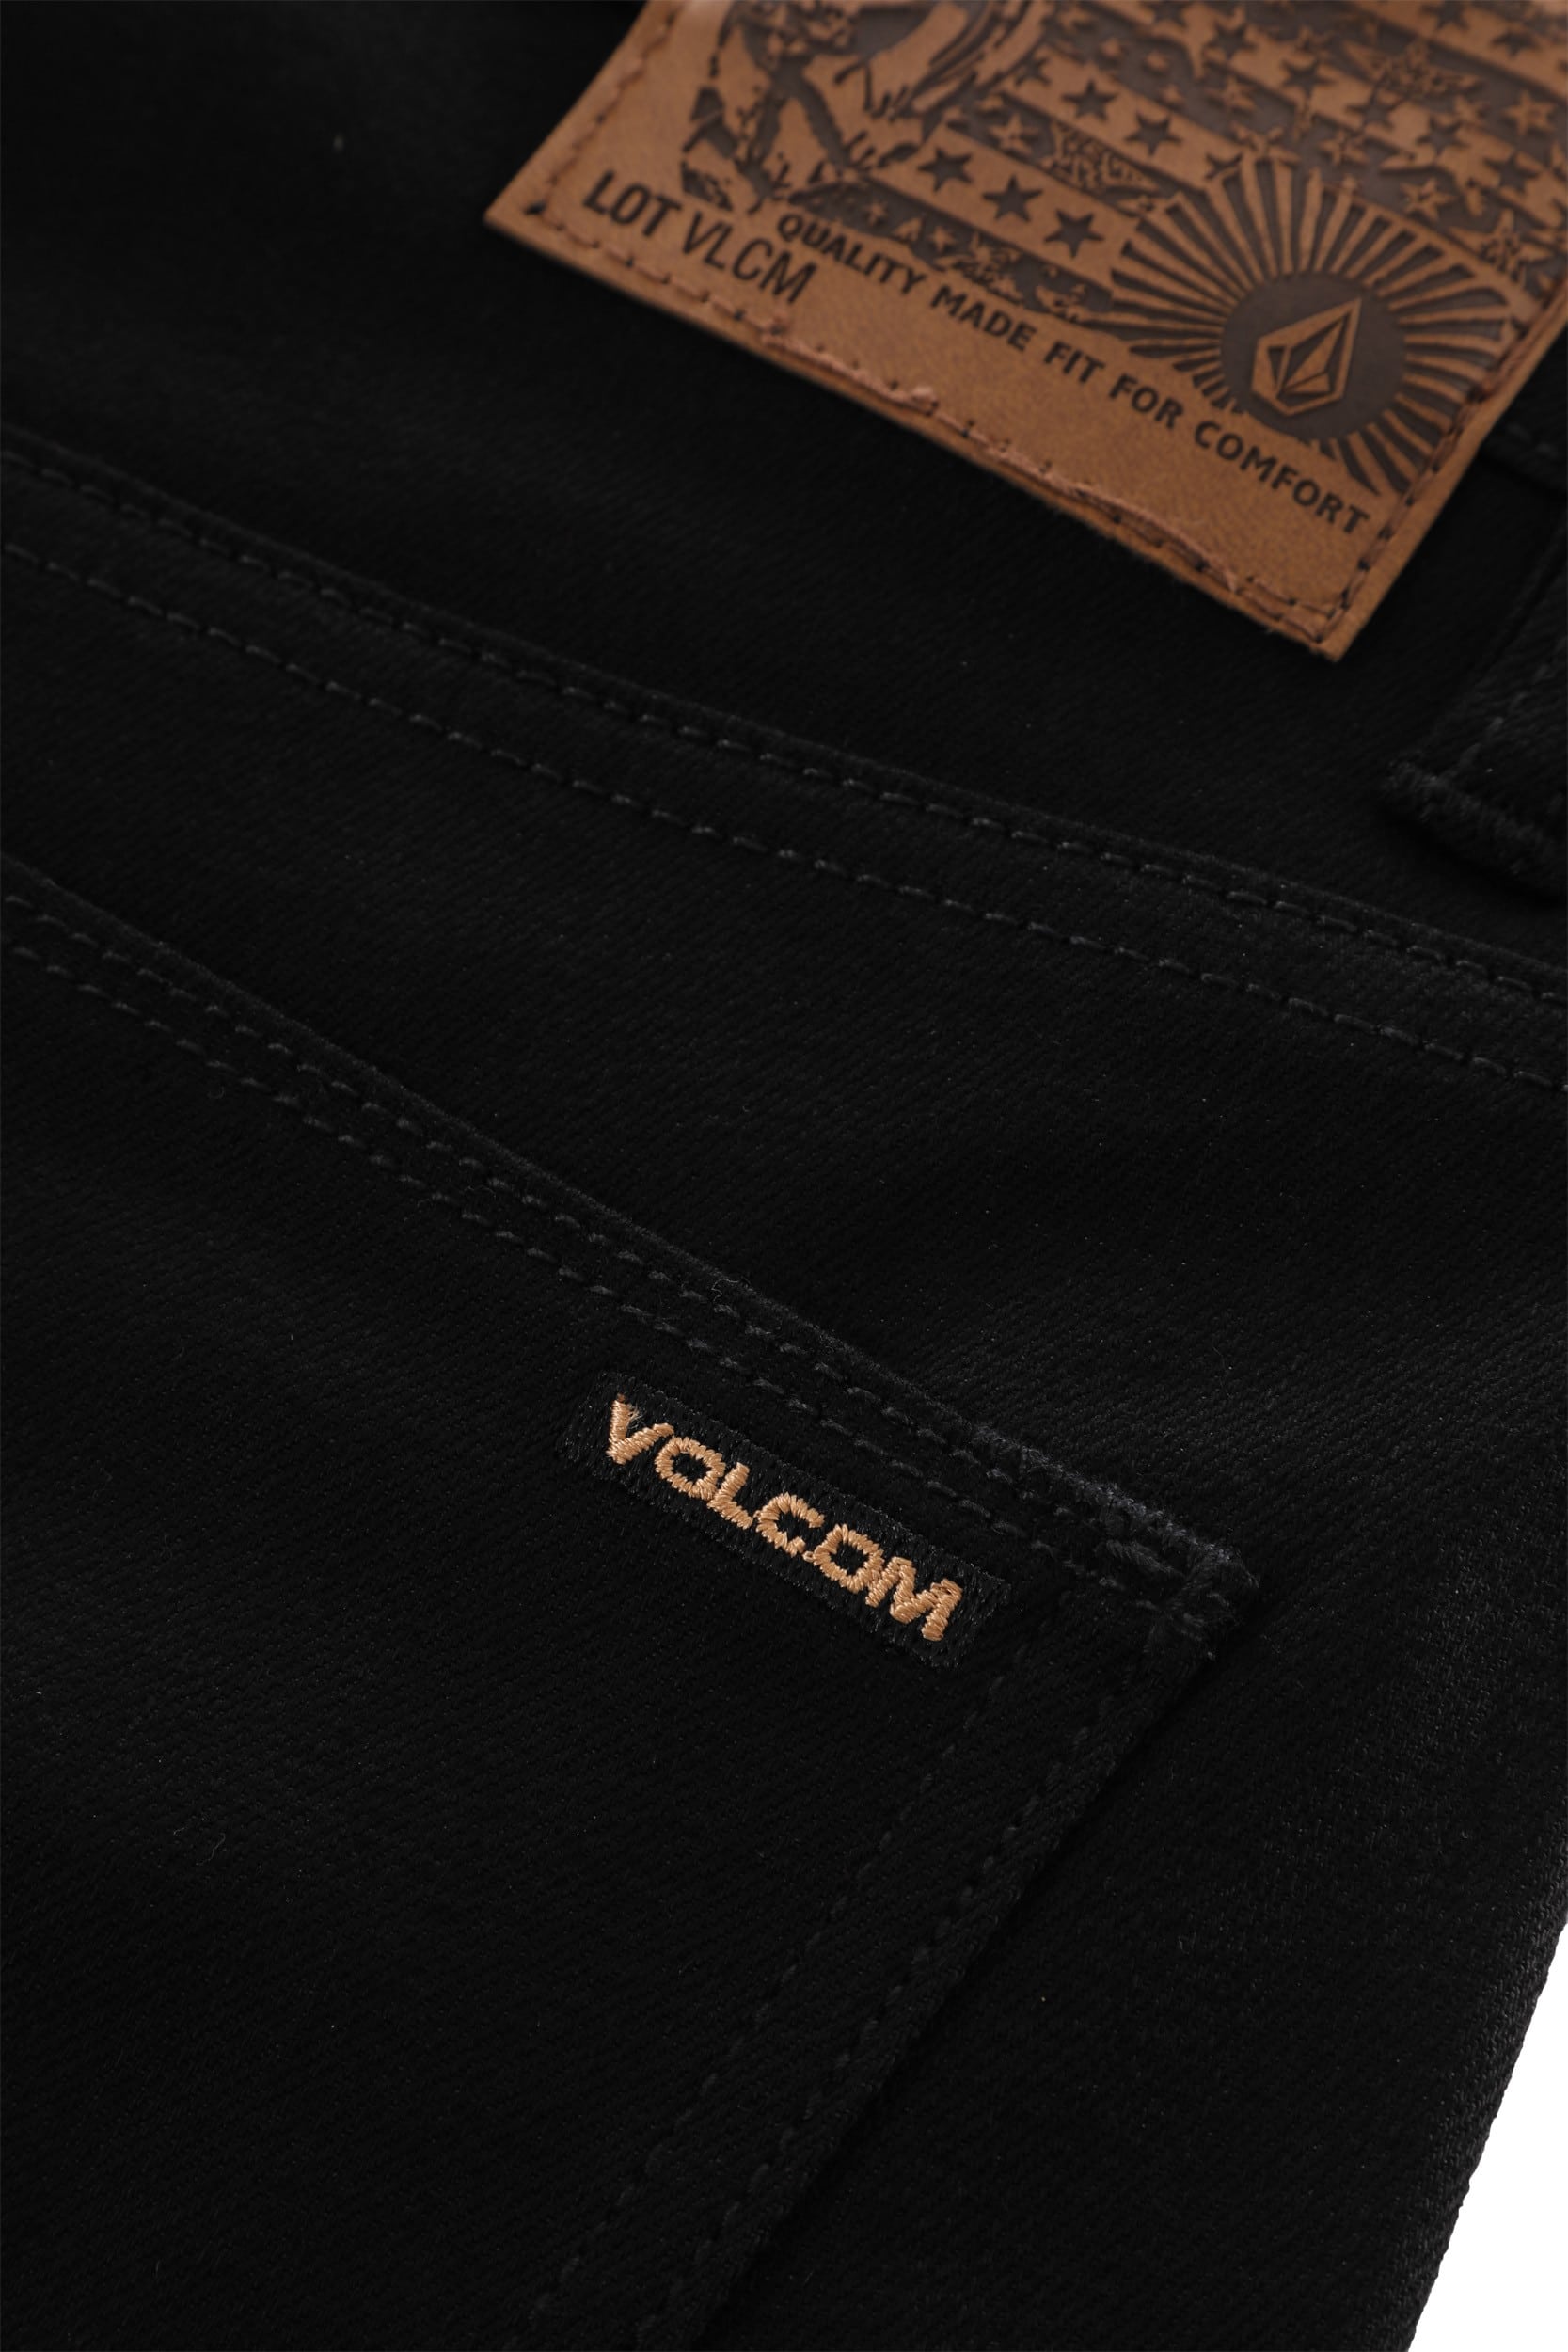 Volcom Modown Jeans - black on black | Tactics